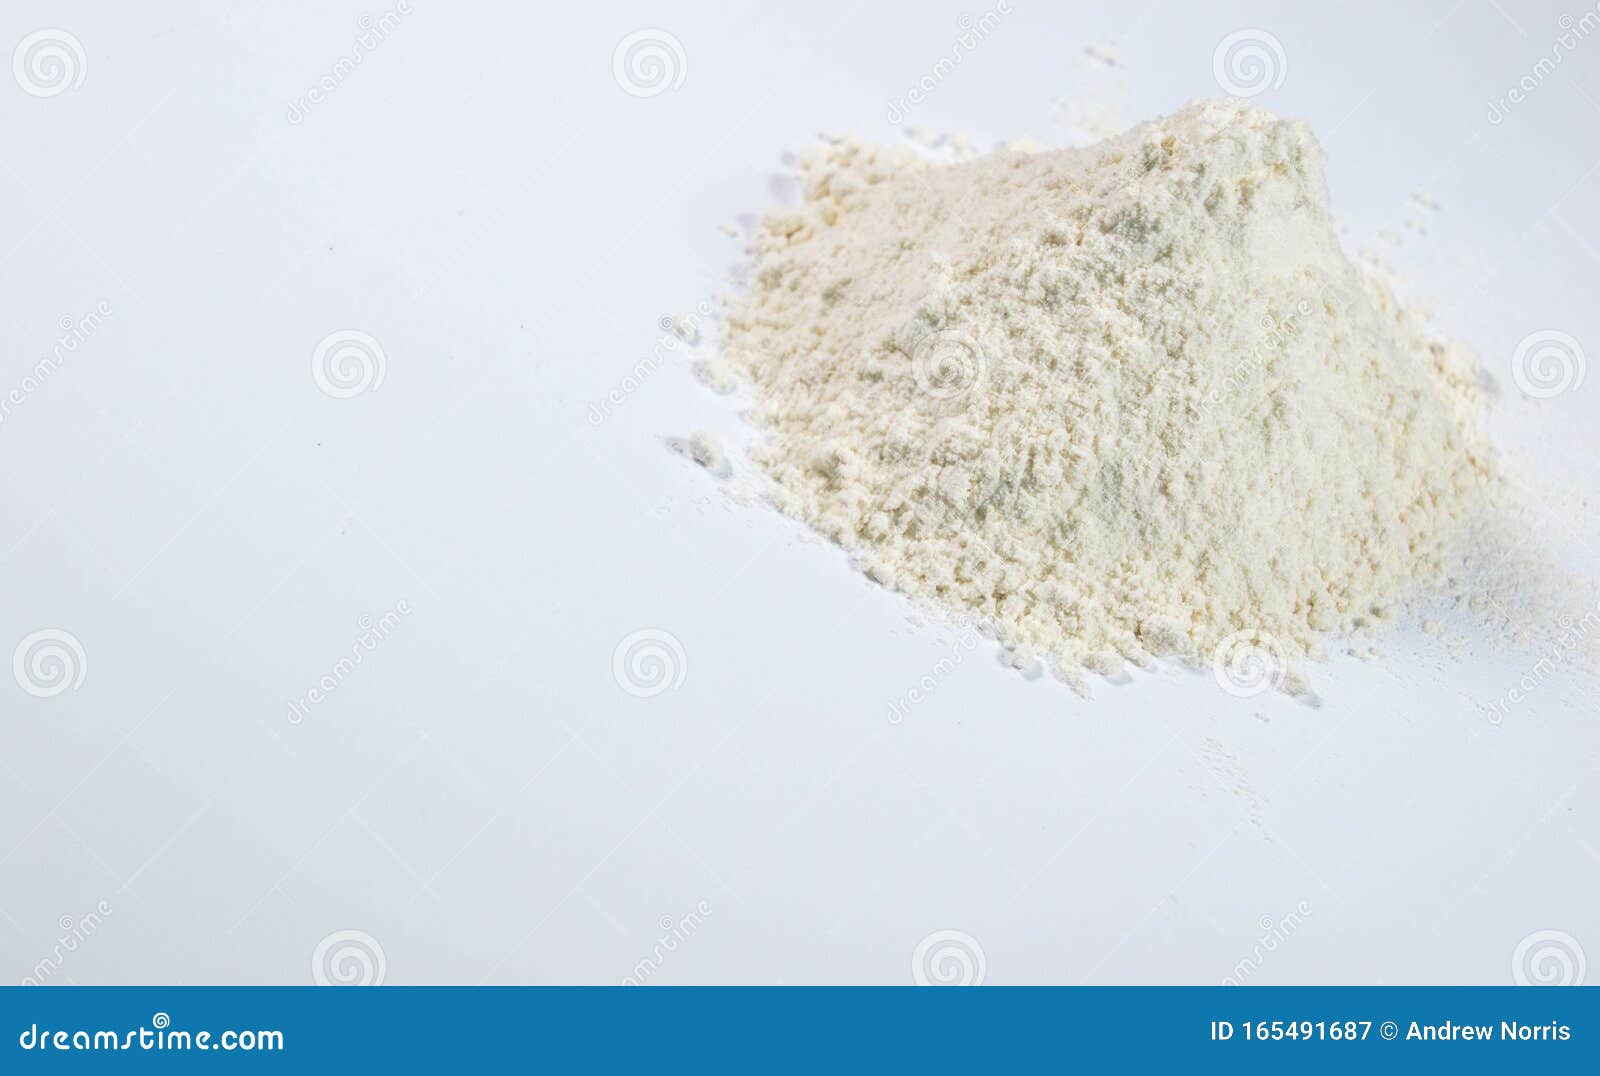 Cocain Pile stock image. Image of white, caught, drug - 165491687